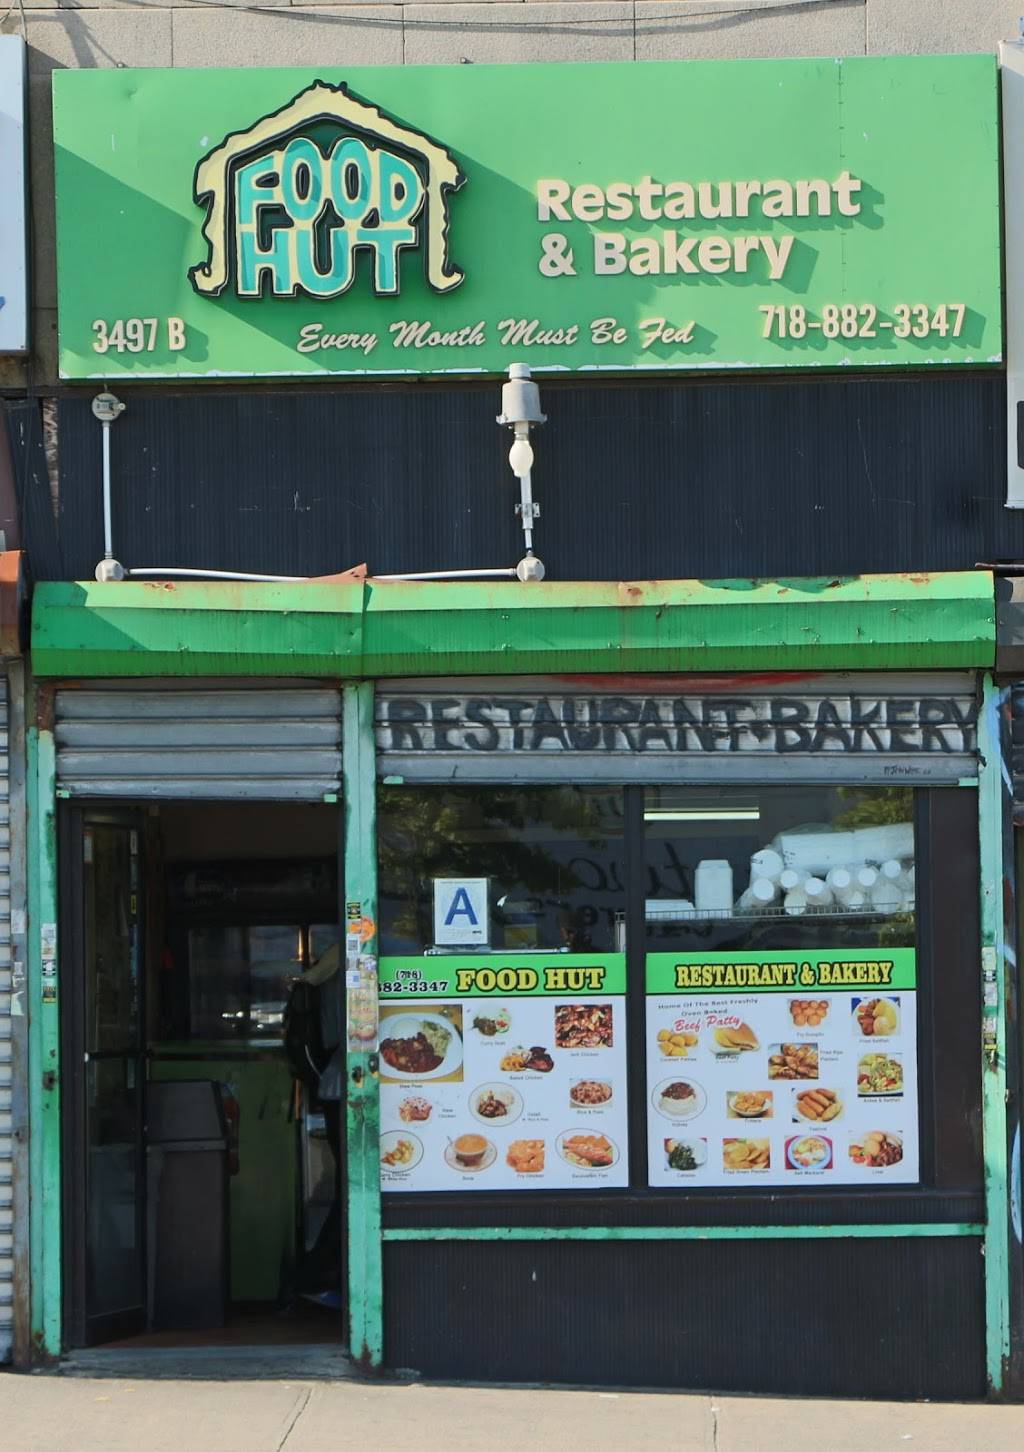 Food Hut | restaurant | 3497 Boston Rd, Bronx, NY 10469, USA | 7188823347 OR +1 718-882-3347